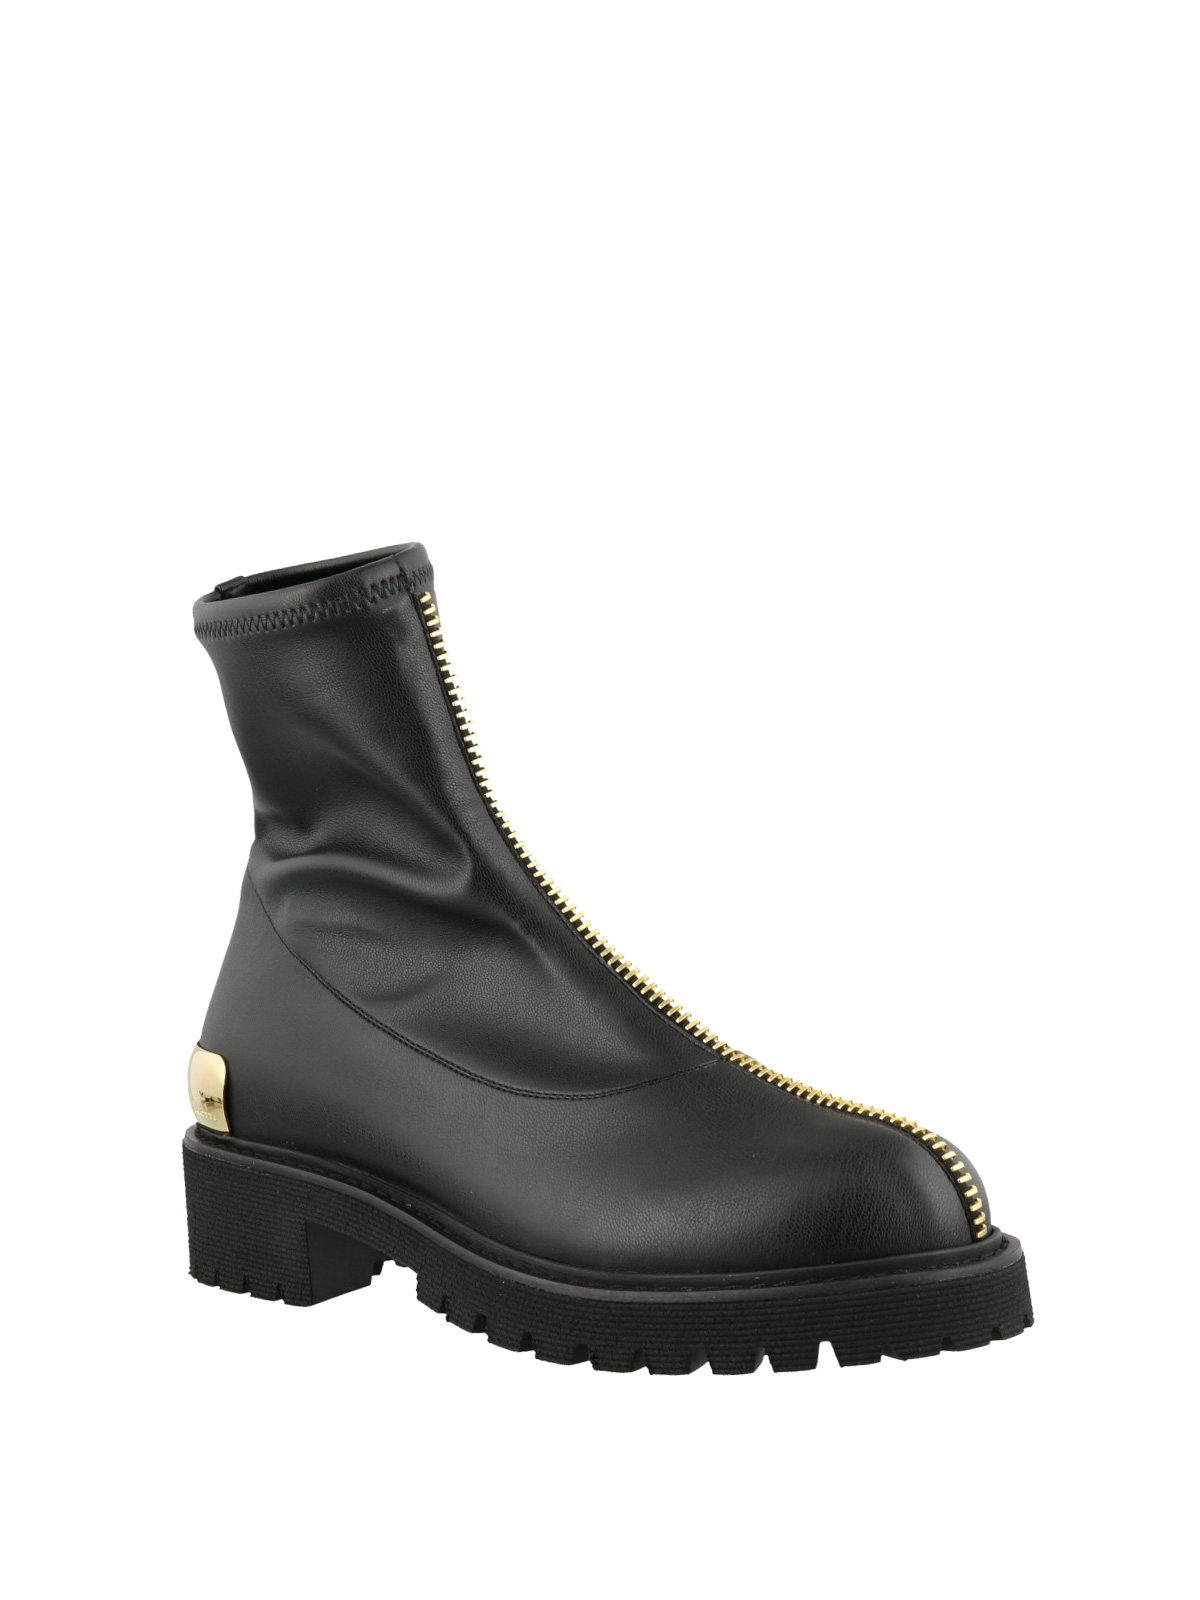 giuseppe zanotti leather ankle boots